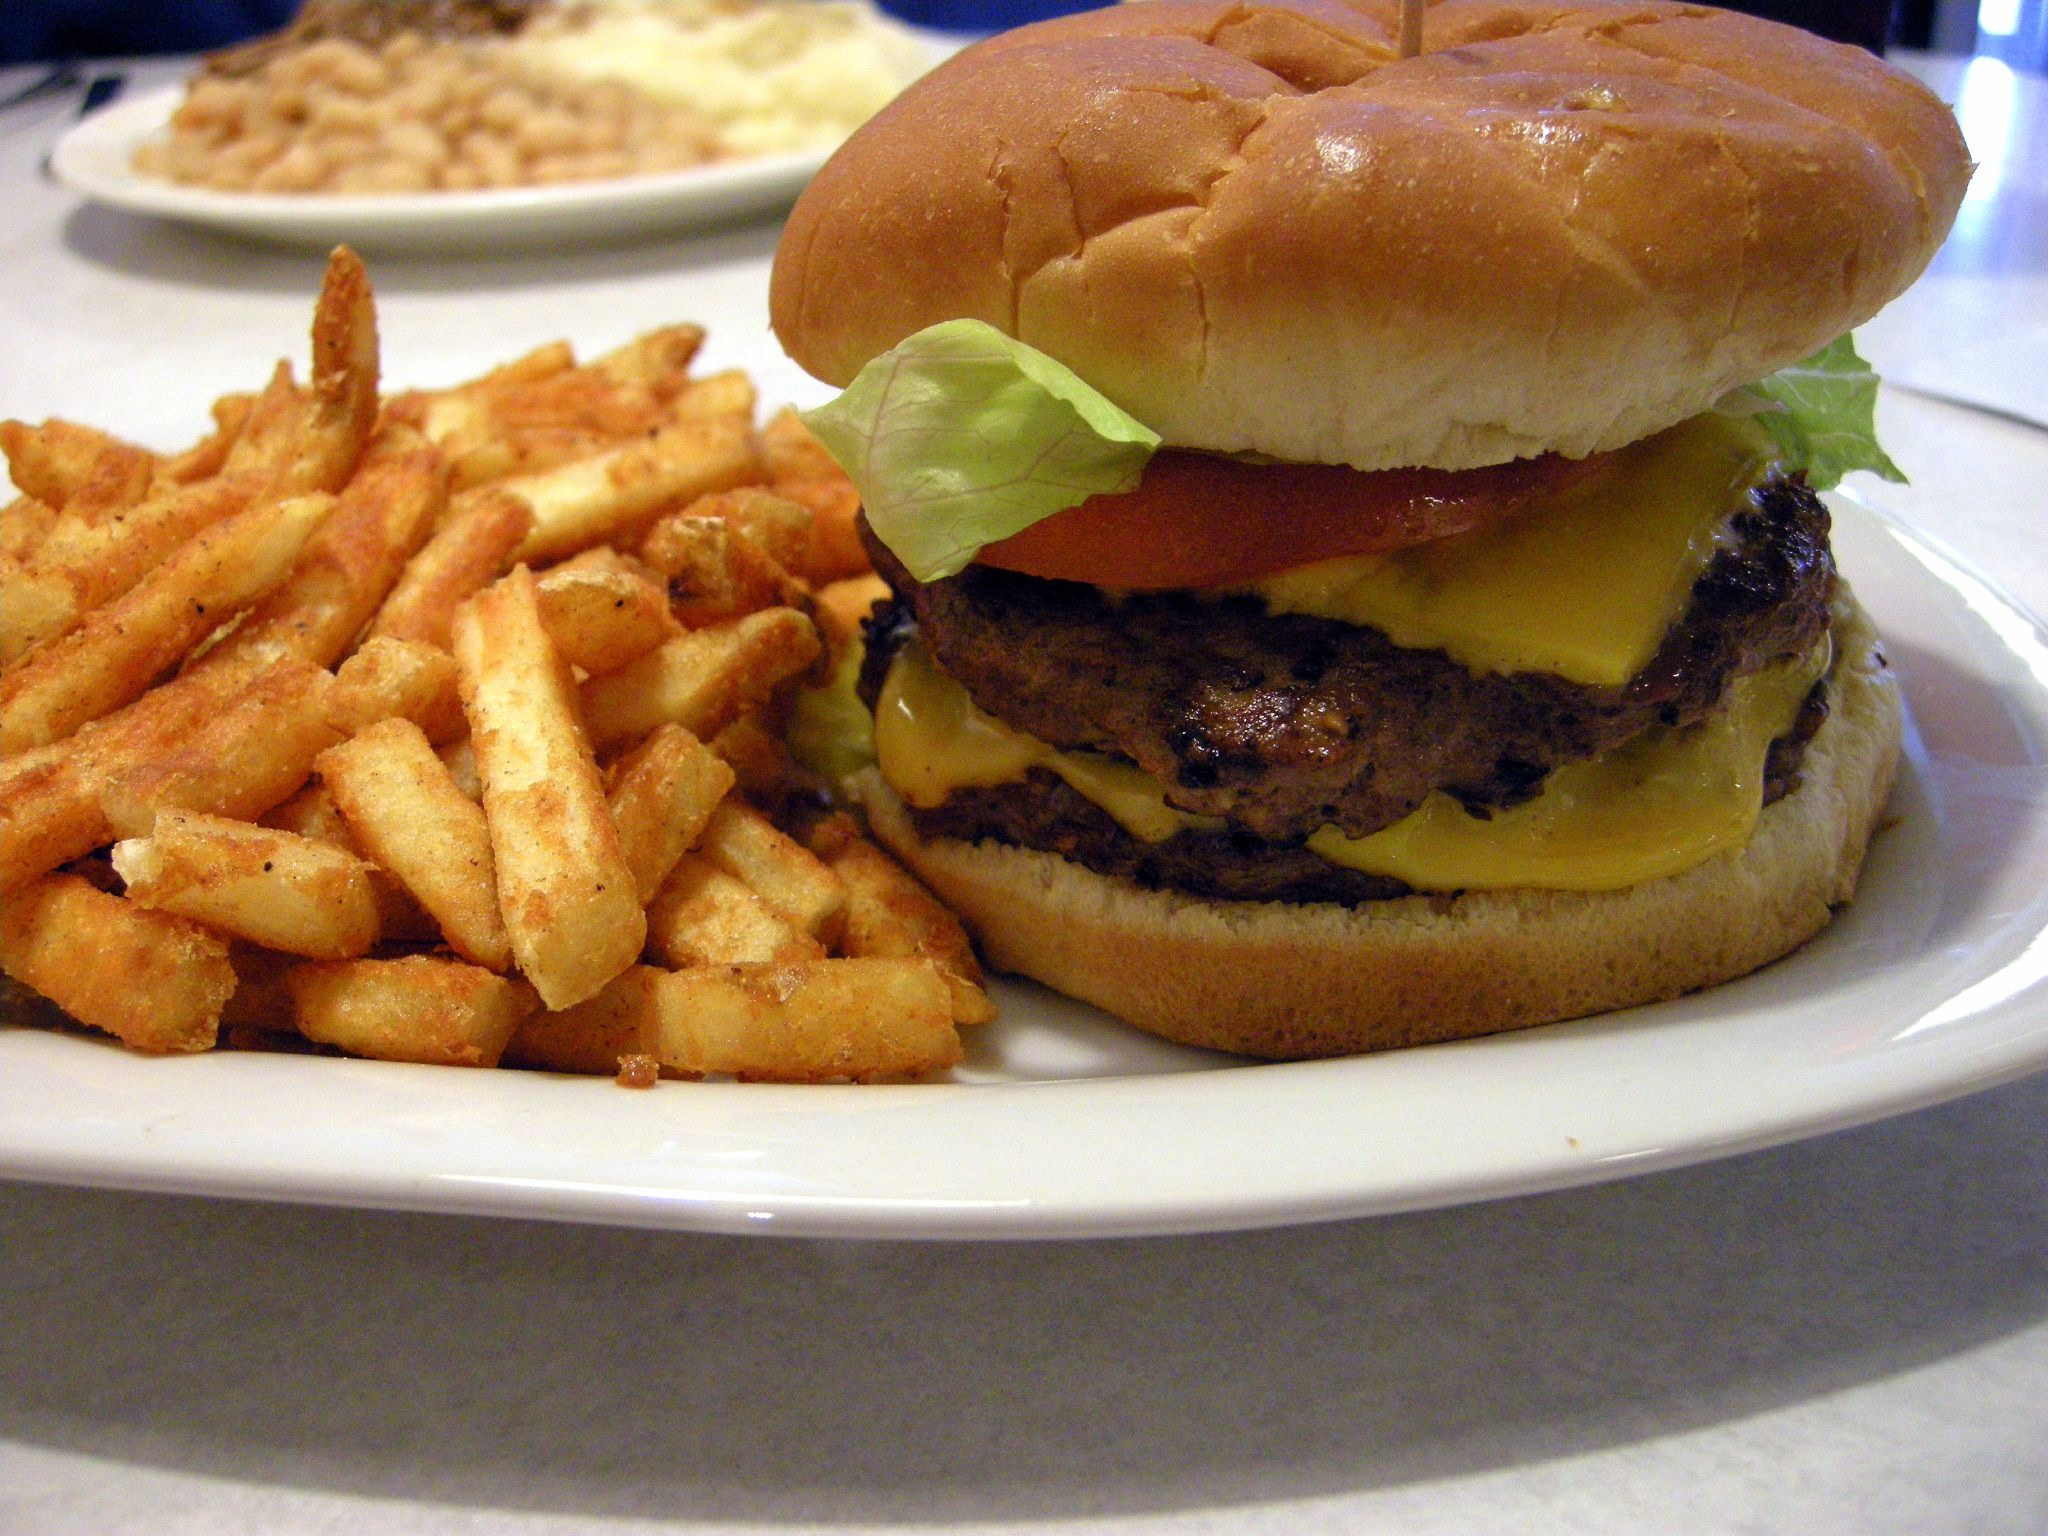 A cheeseburger and fries.